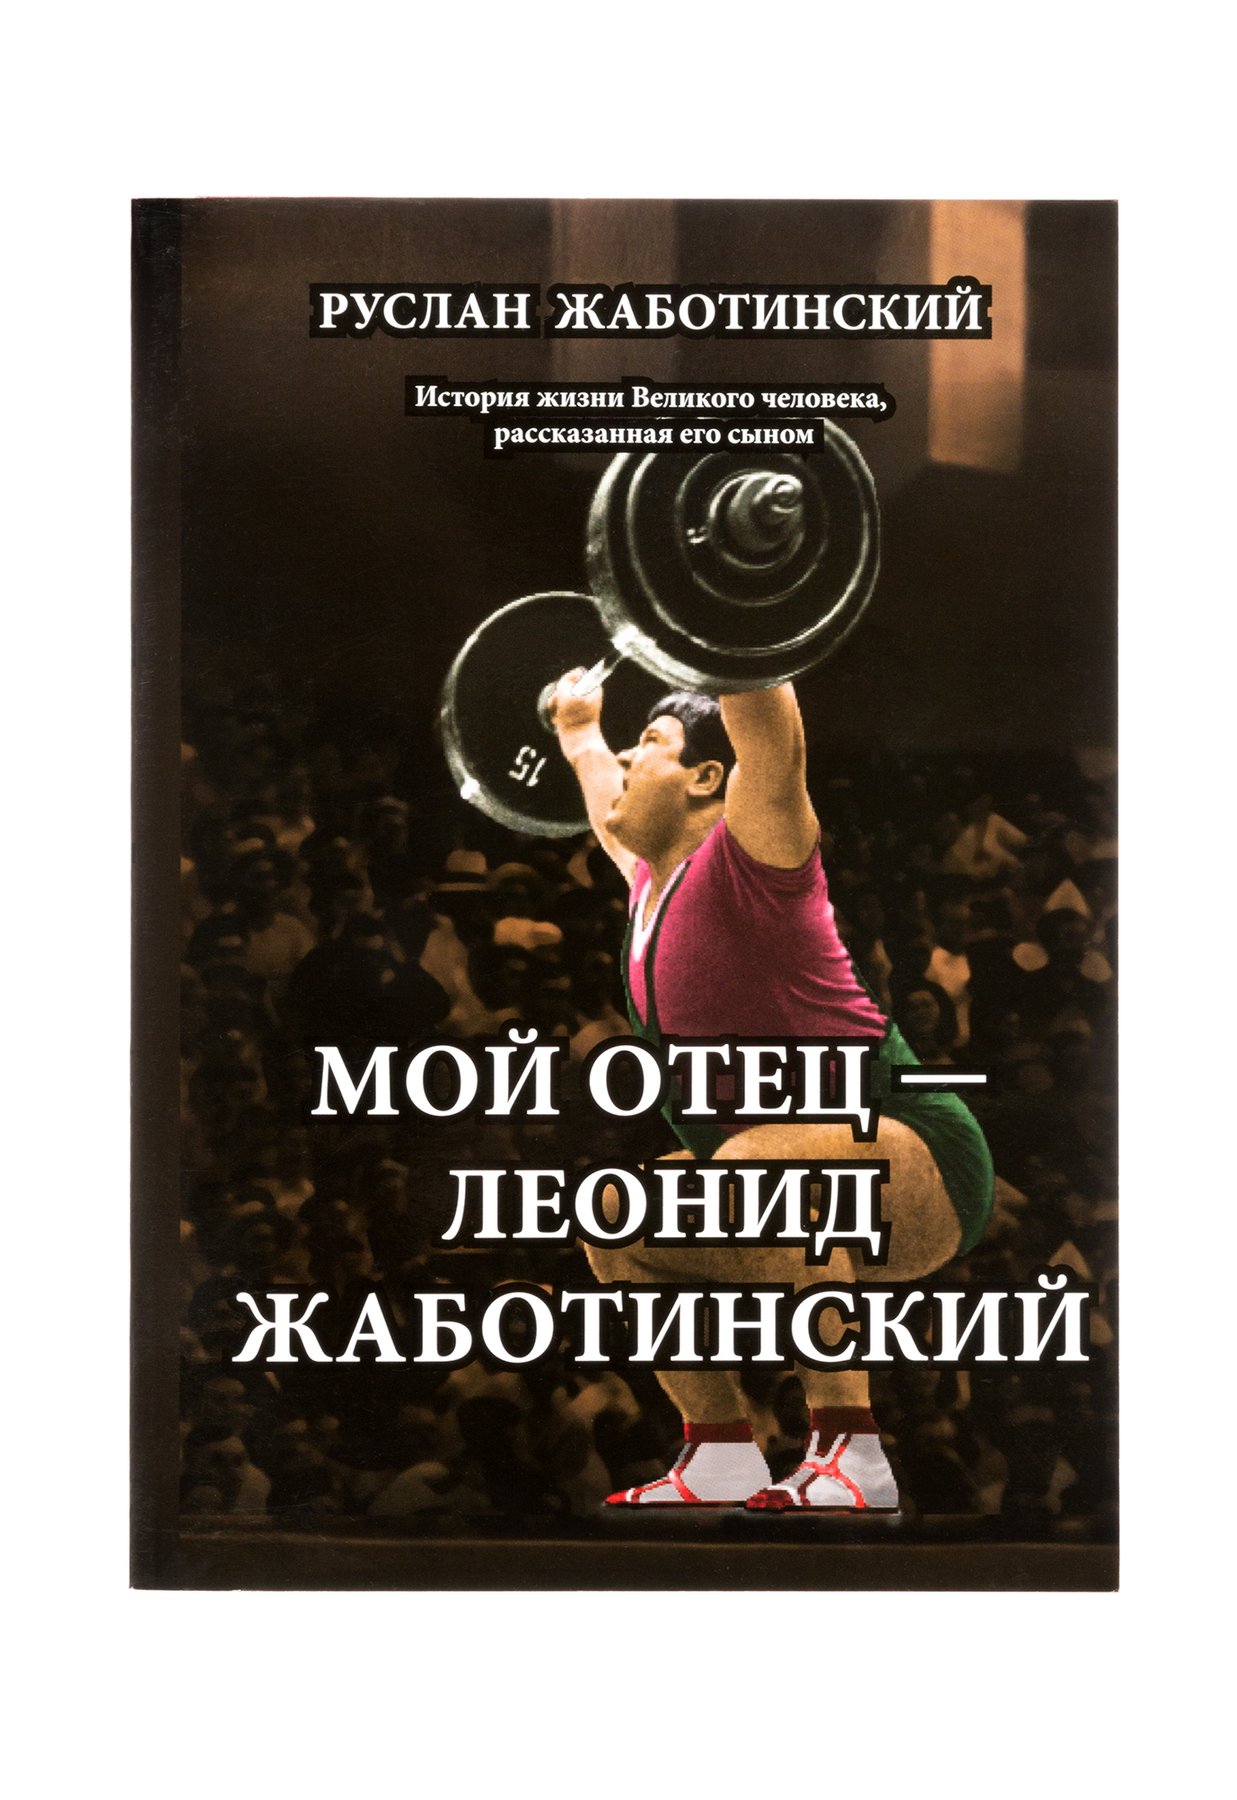 Book My father Leonid Zhabotinsky - PDF